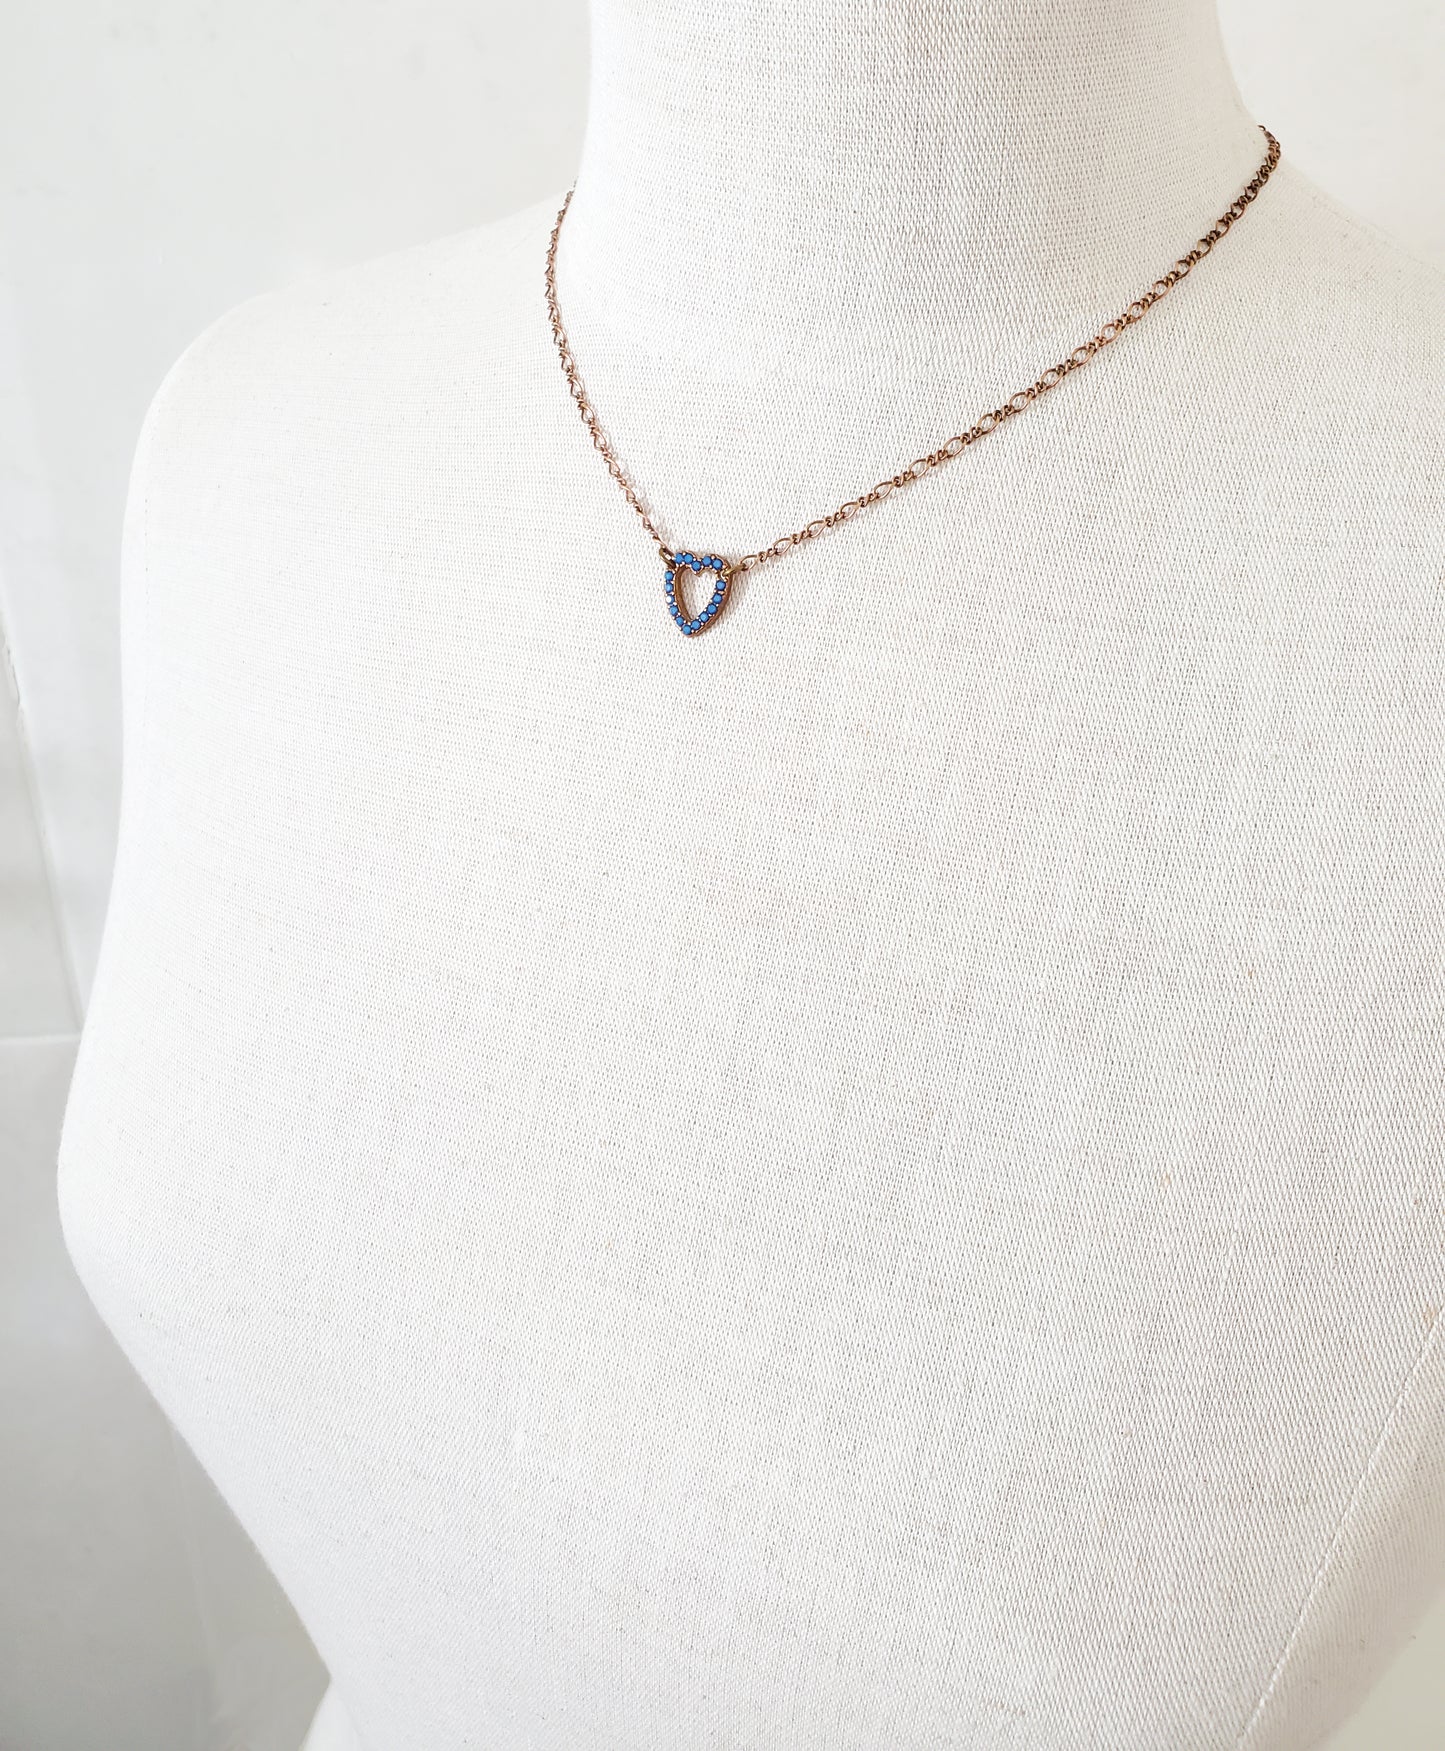 Blue Opal Heart Charm Necklace